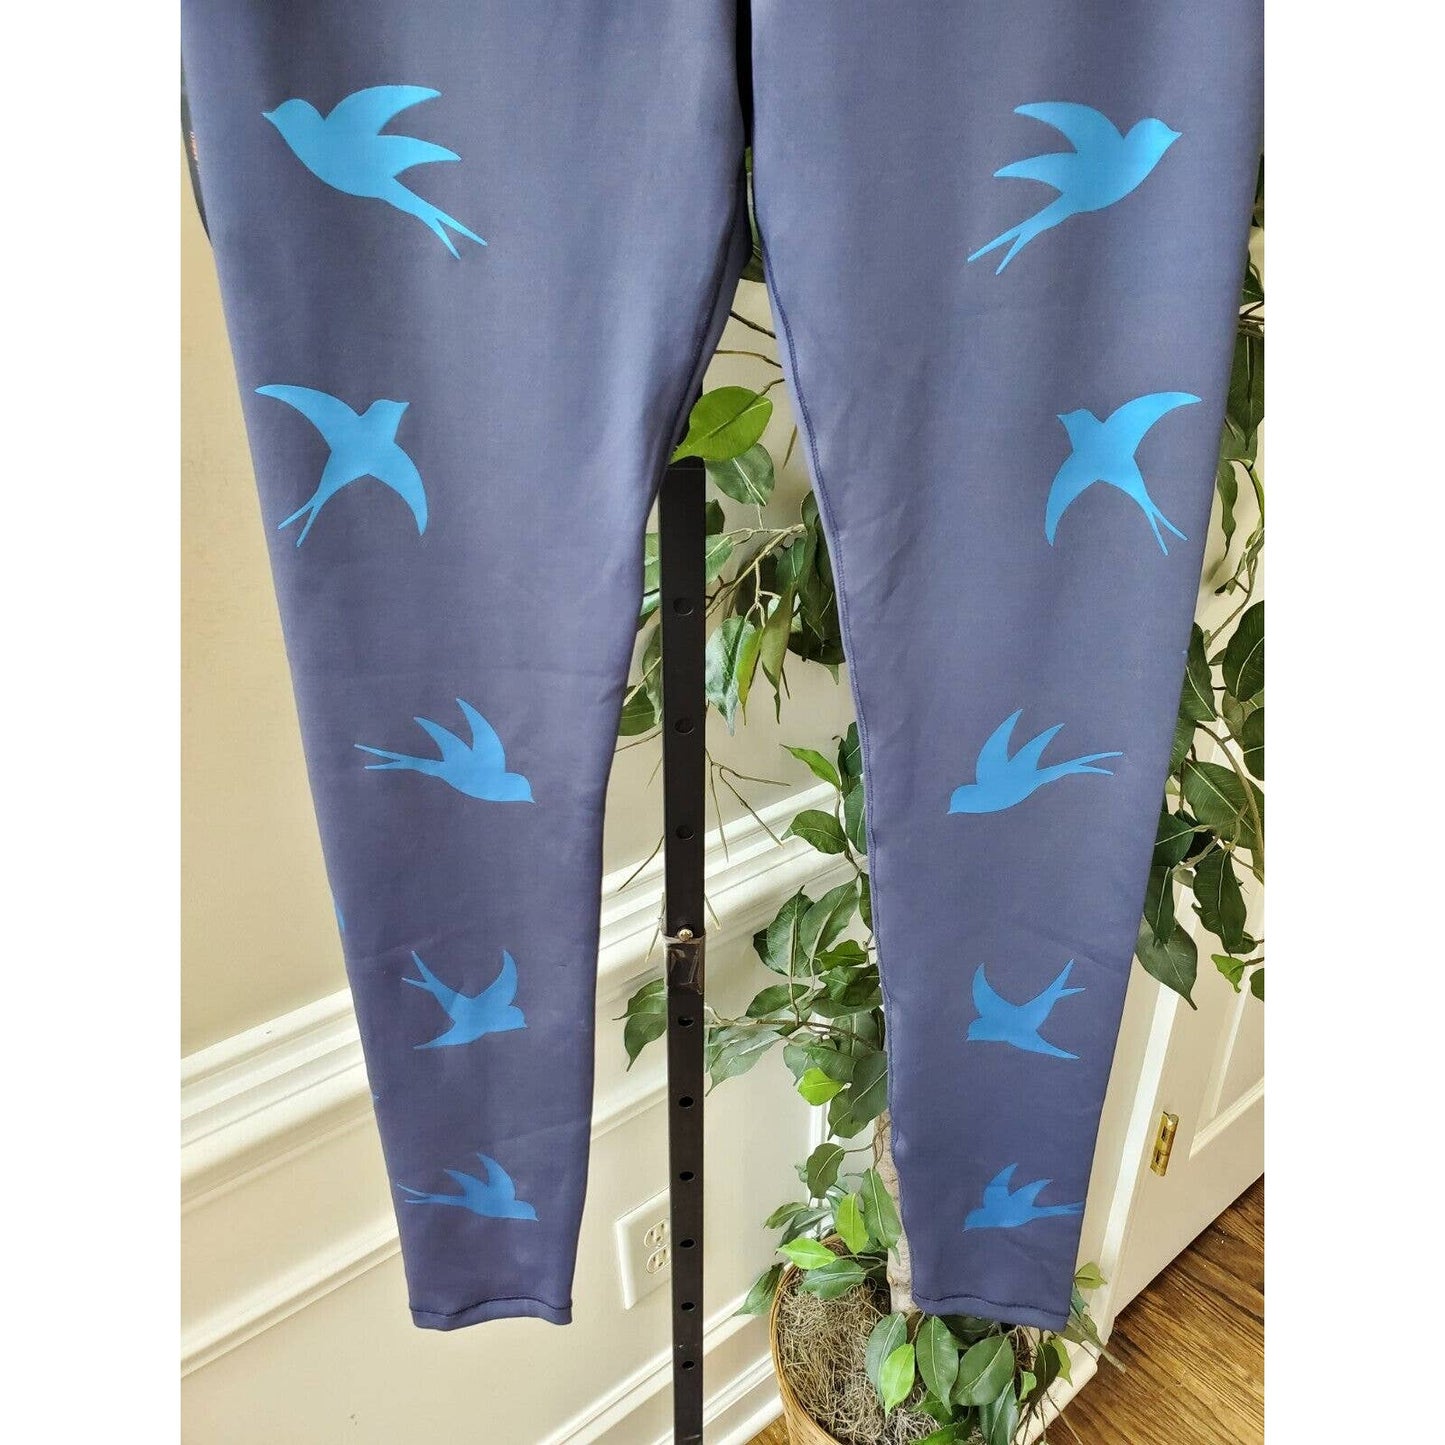 Noli Women Blue Bird Polyester Mid Rise Pull on Skinny Fit Yoga Pant Size M